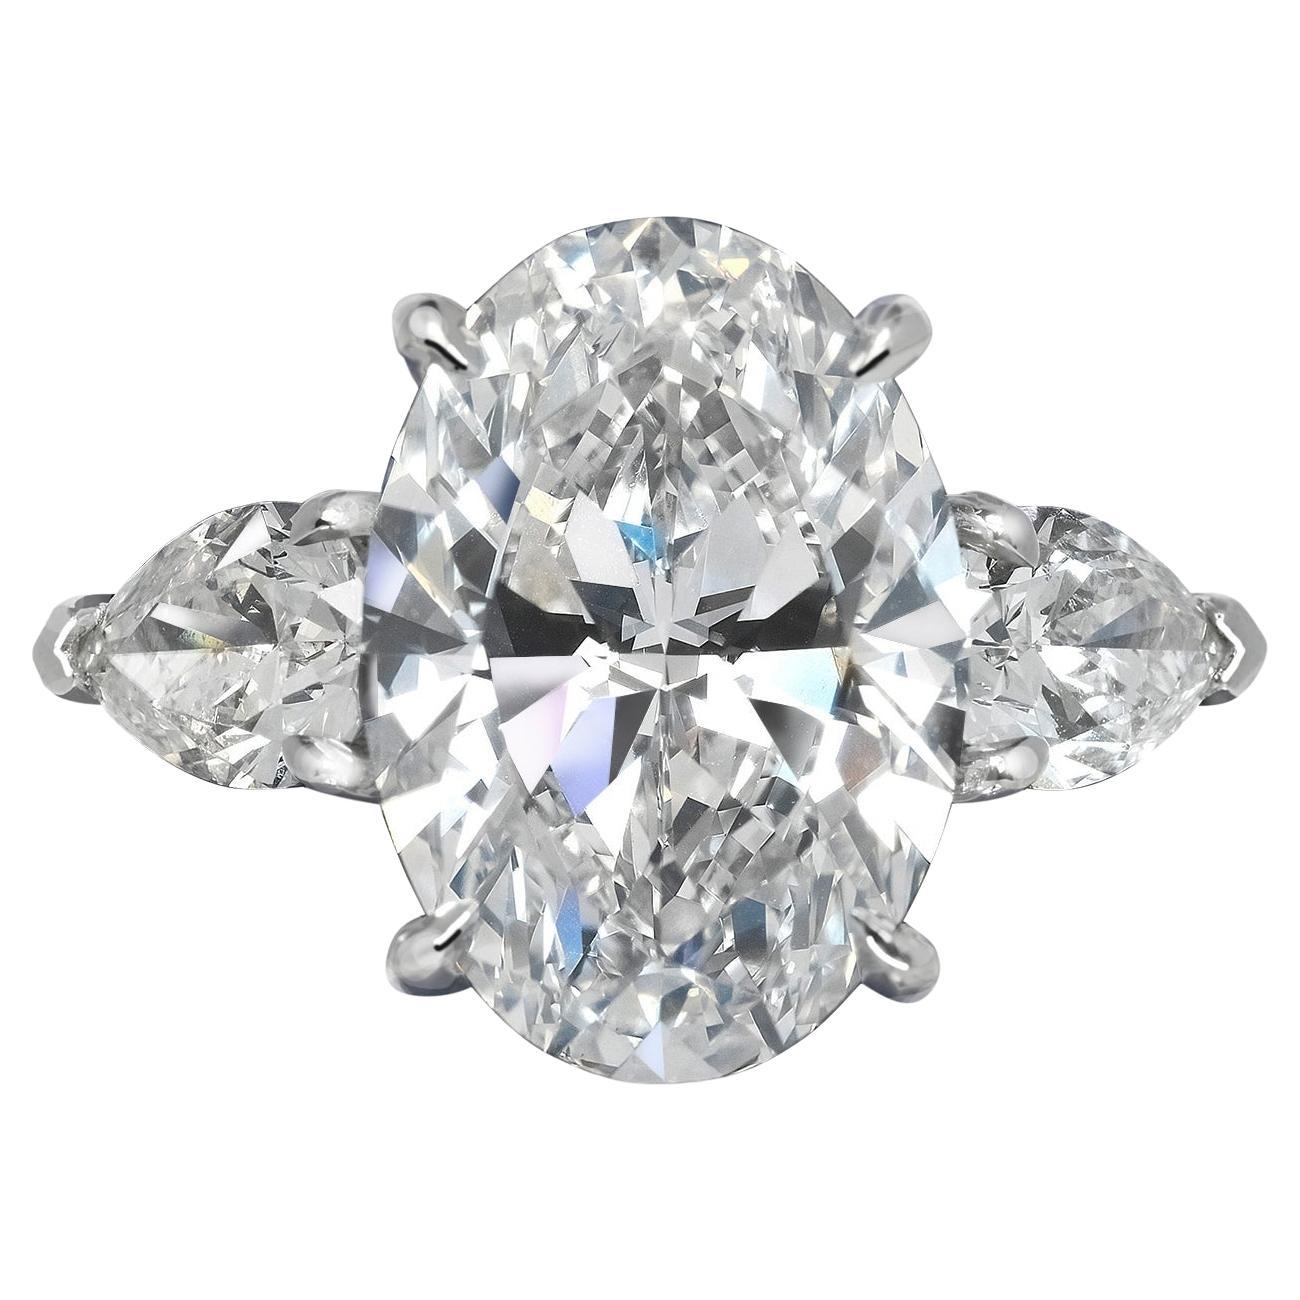 6 Carat Oval Cut Diamond Engagement Ring GIA Certified E VVS2